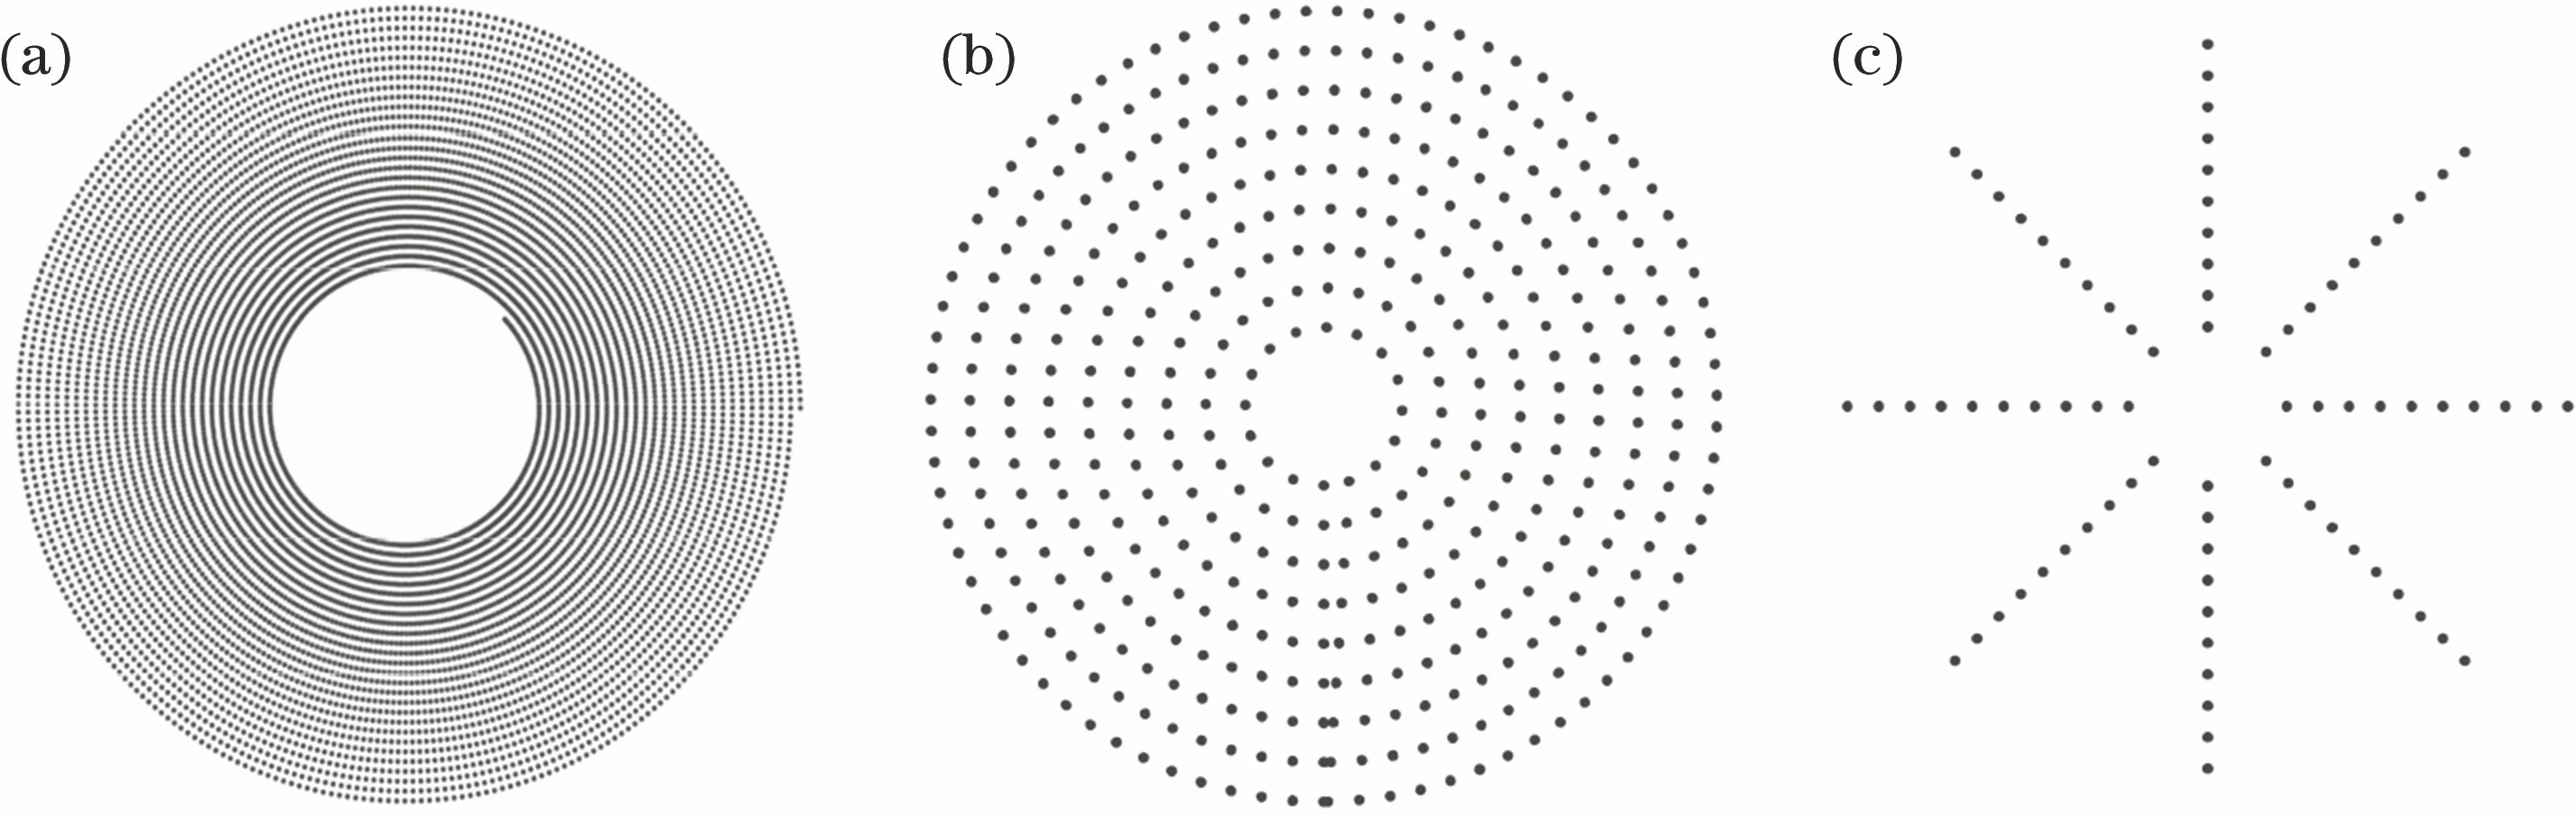 Distribution of sampling points on polishing pad surface. (a) Spiral distribution; (b) circle distribution; (c) radial linear distribution